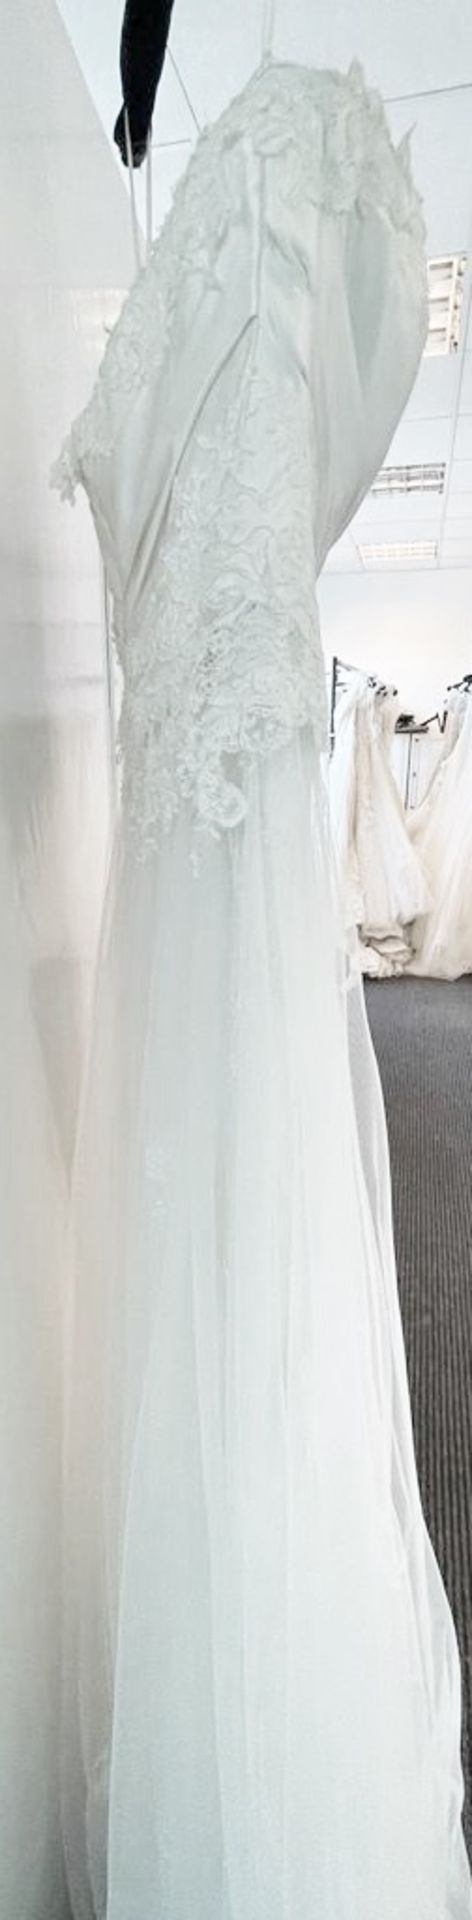 1 x LUSAN MANDONGUS / ANNASUL Y 'Infinity' Strapless Designer Wedding Dress - UK 12 - RRP £1,700 - Image 2 of 8